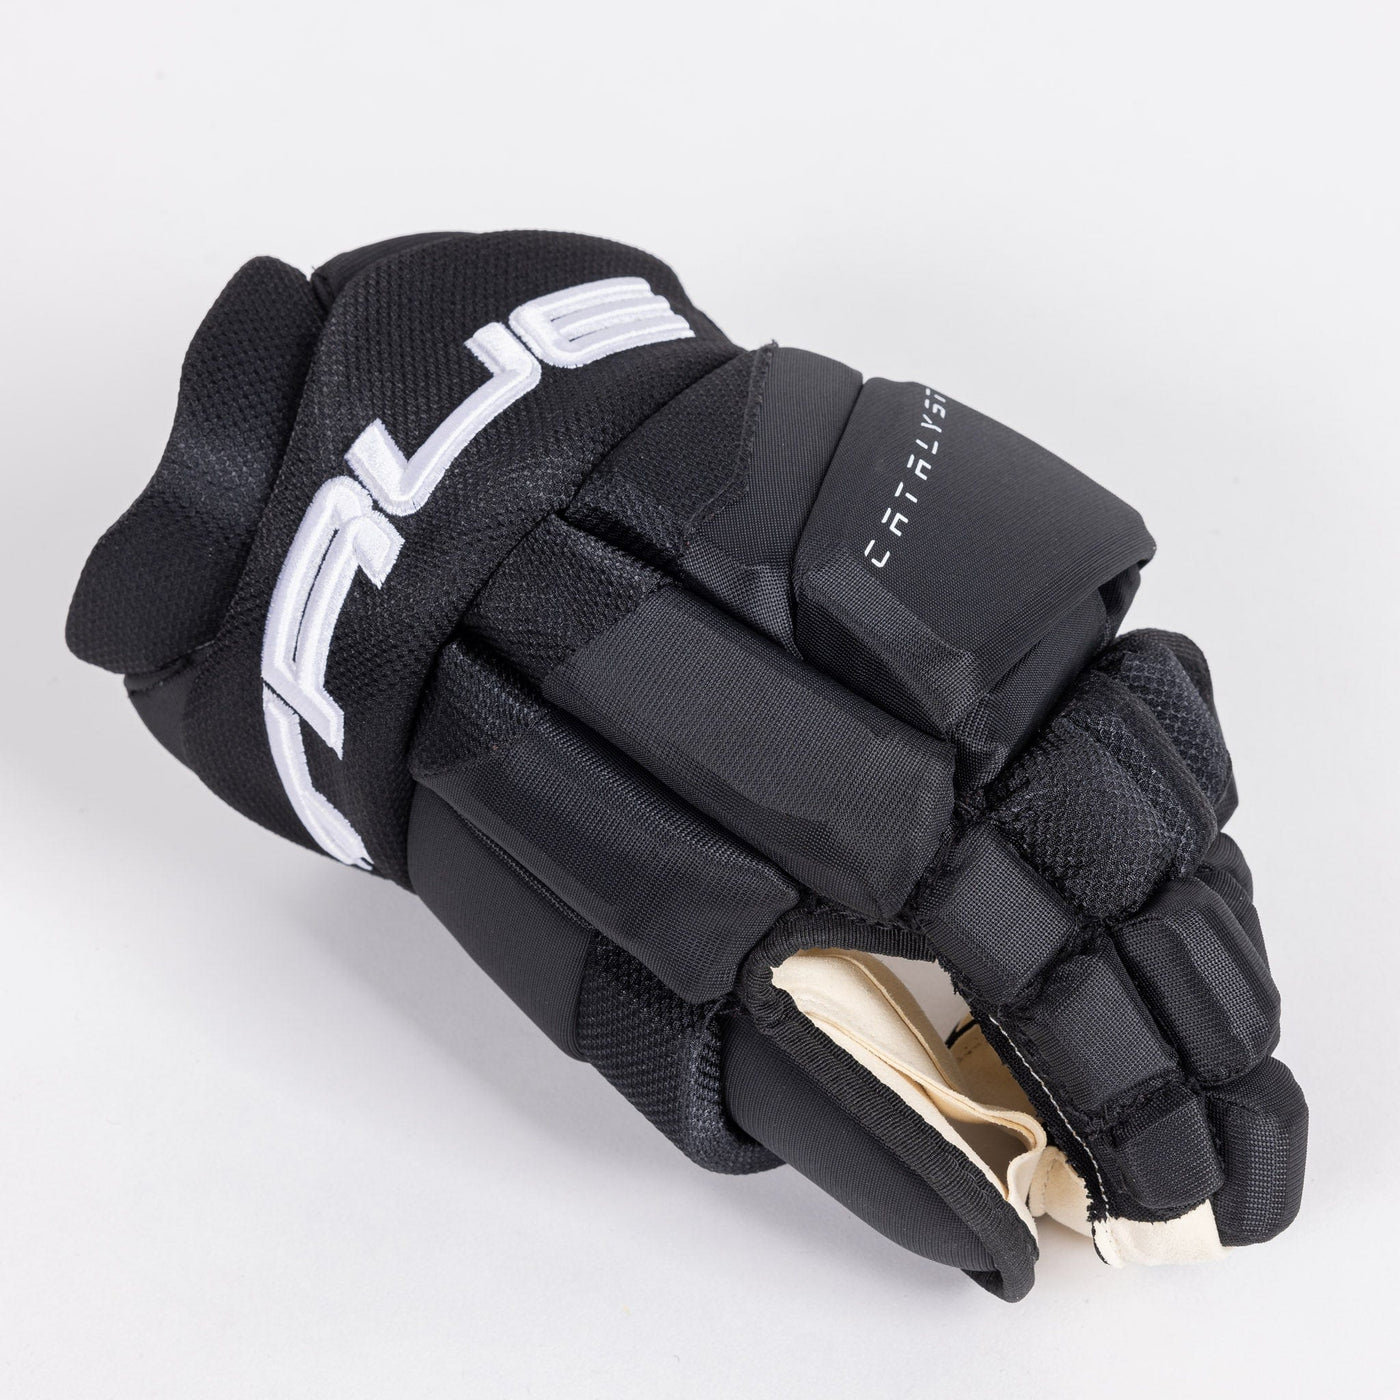 TRUE Catalyst Pro Stock Senior Hockey Glove - Chicago Vintage - The Hockey Shop Source For Sports